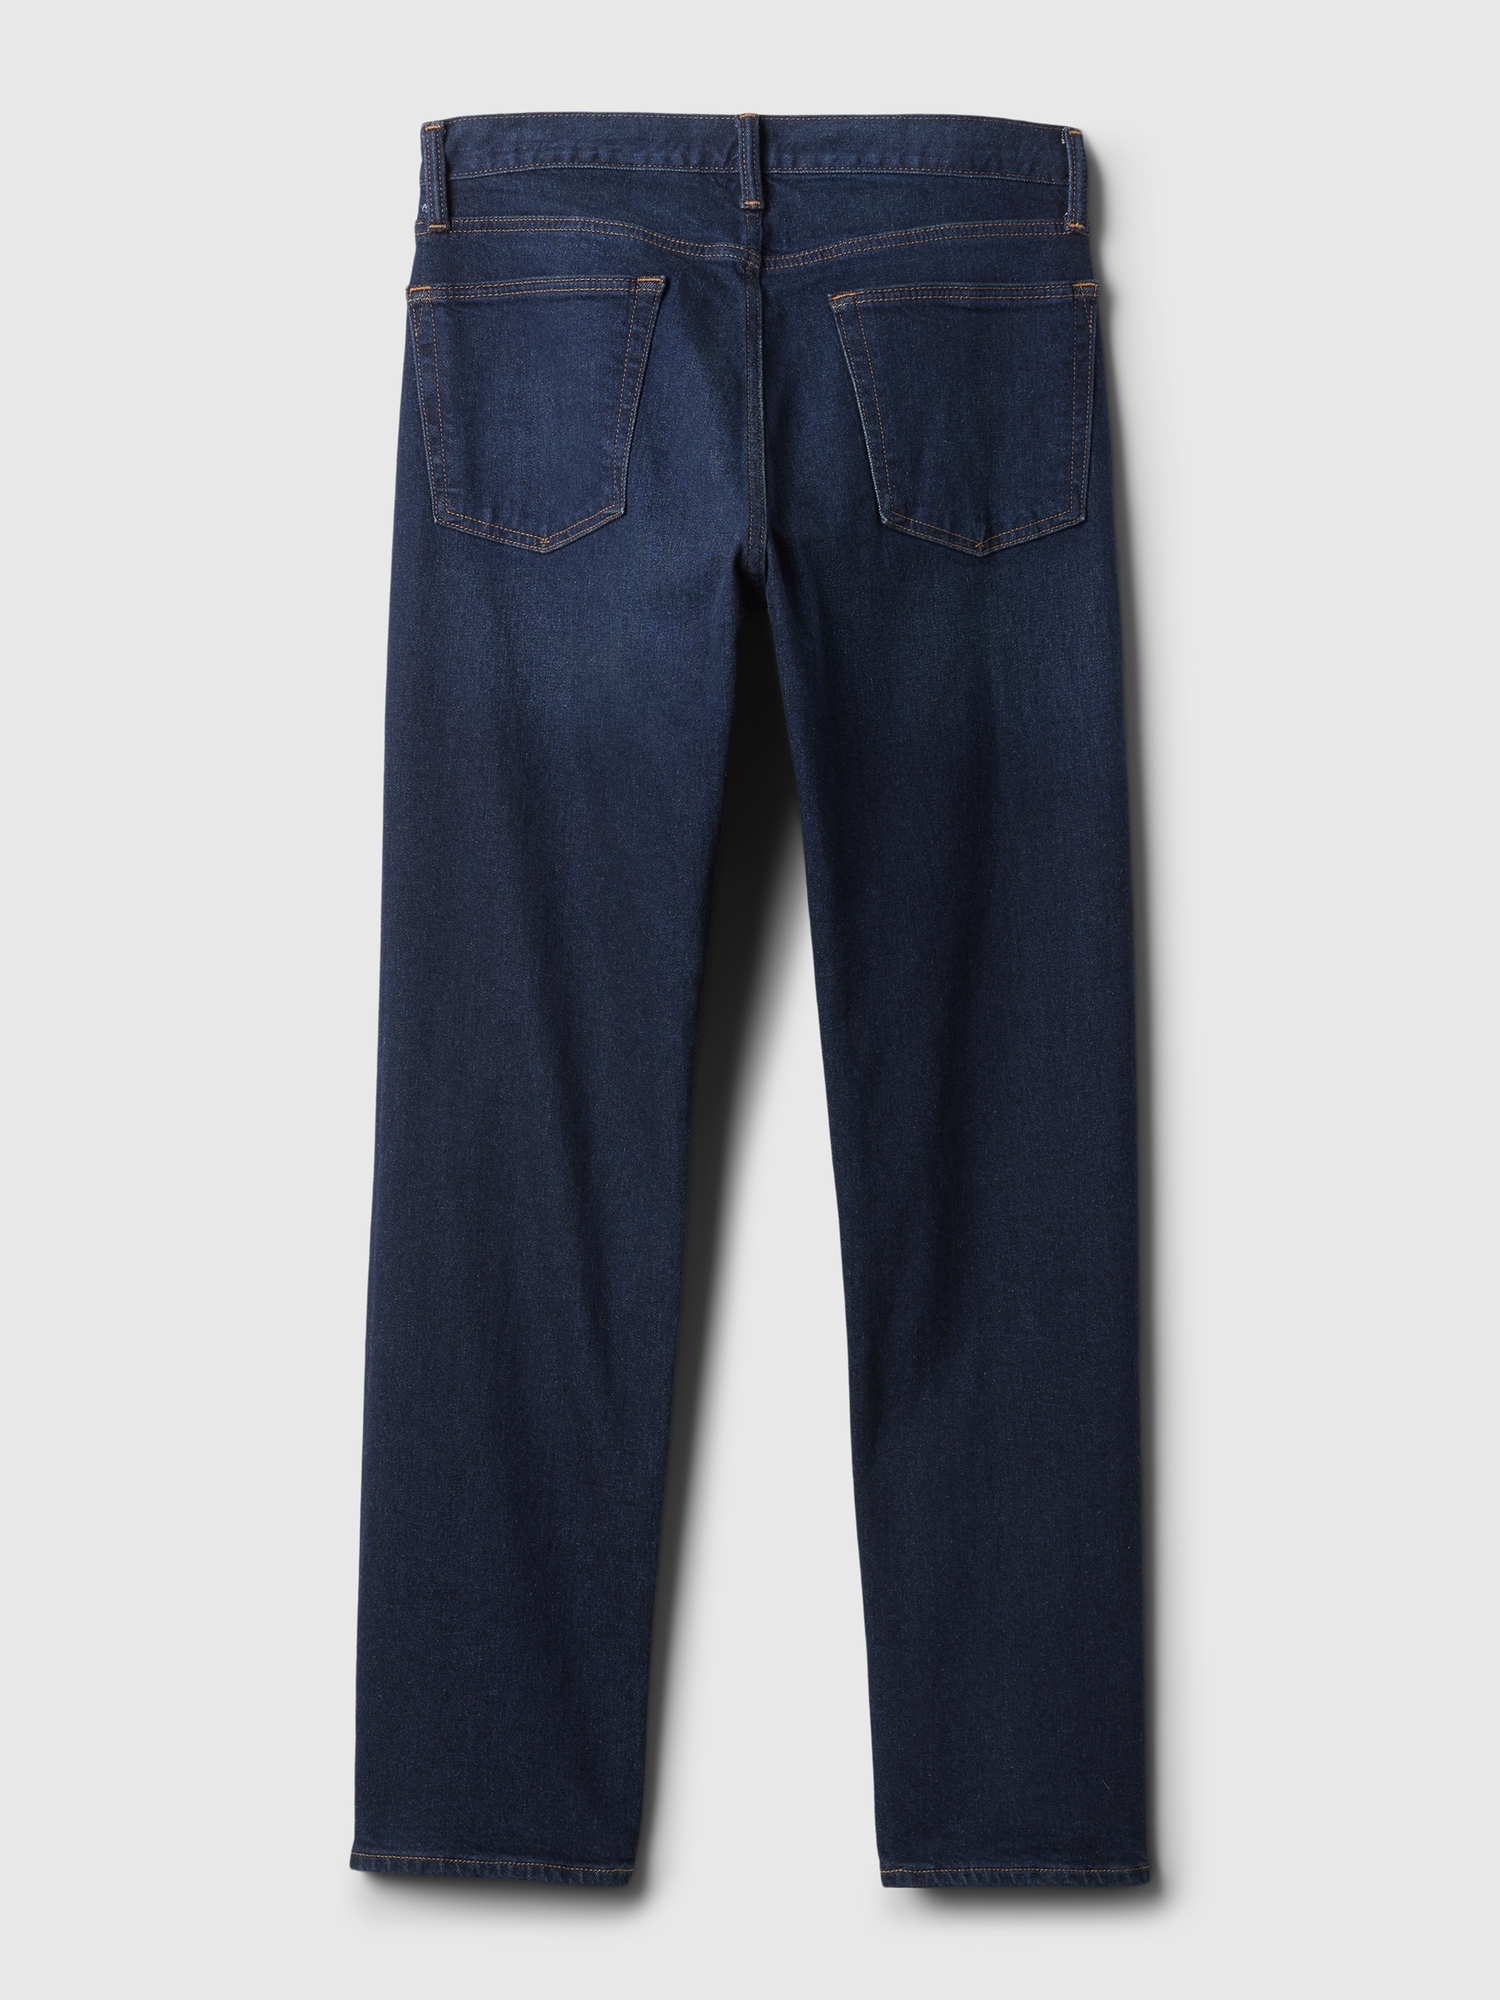 GAP Mens Gapflex Slim Jeans, Rinsed, 28W x 30L US at  Men's Clothing  store